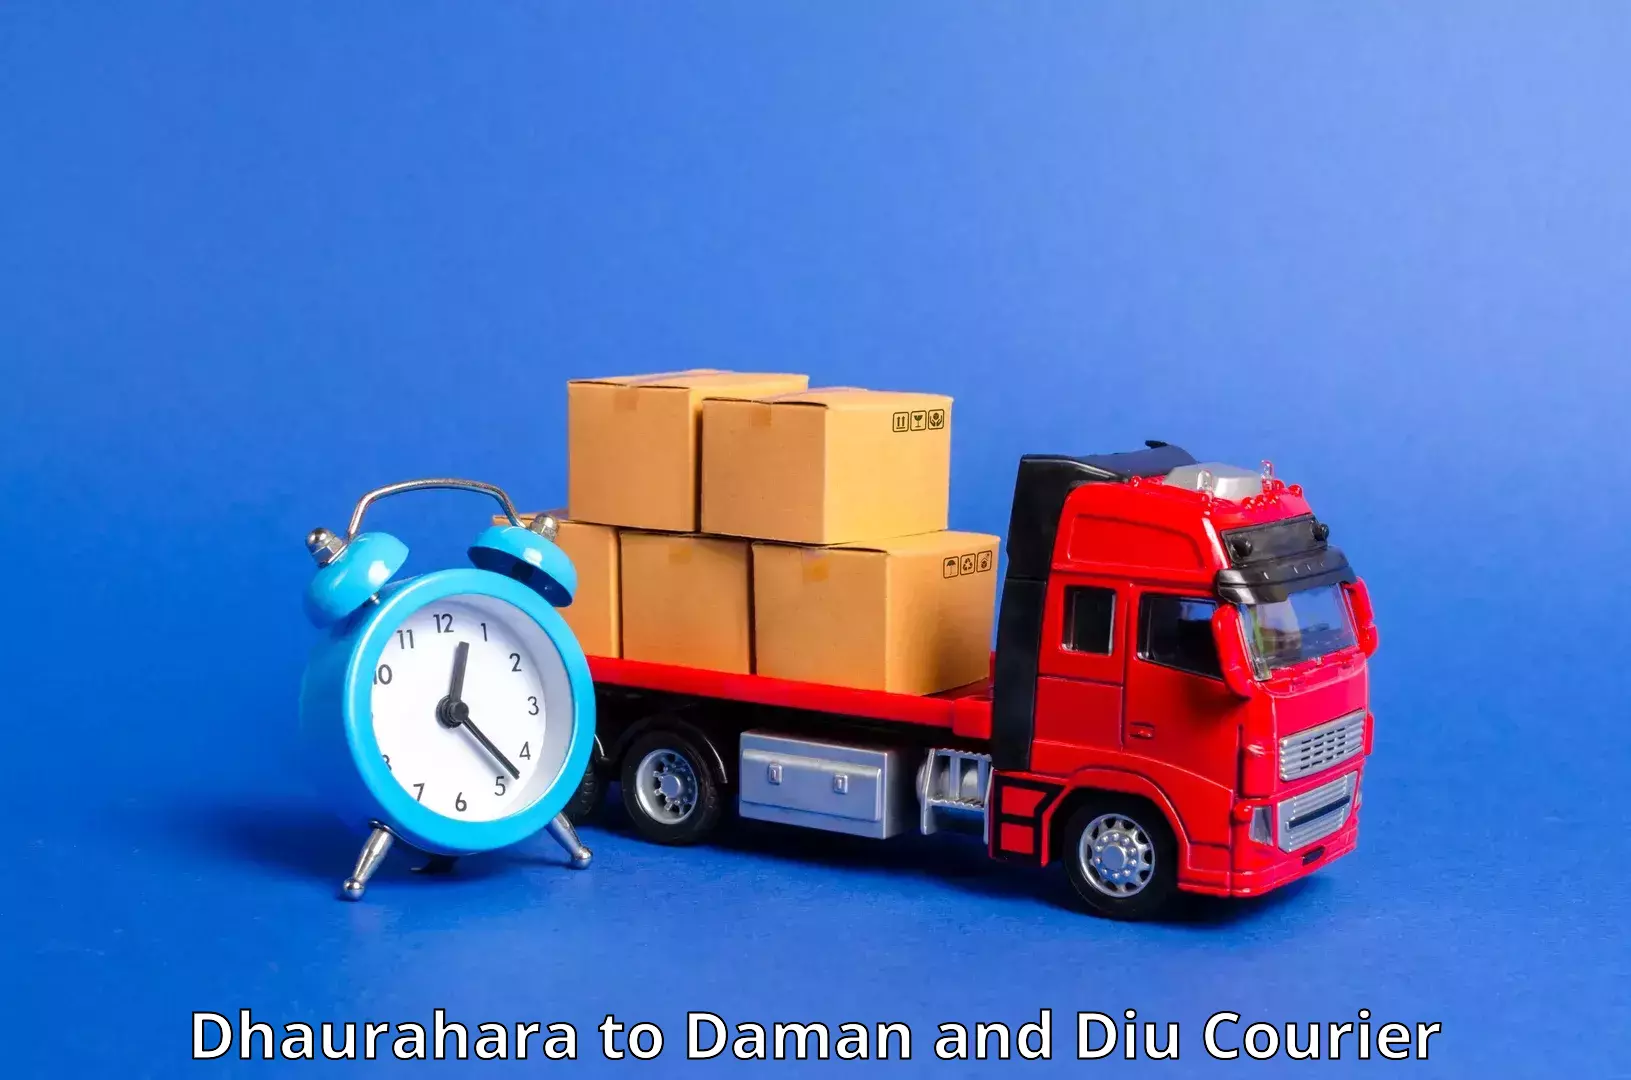 Efficient order fulfillment Dhaurahara to Daman